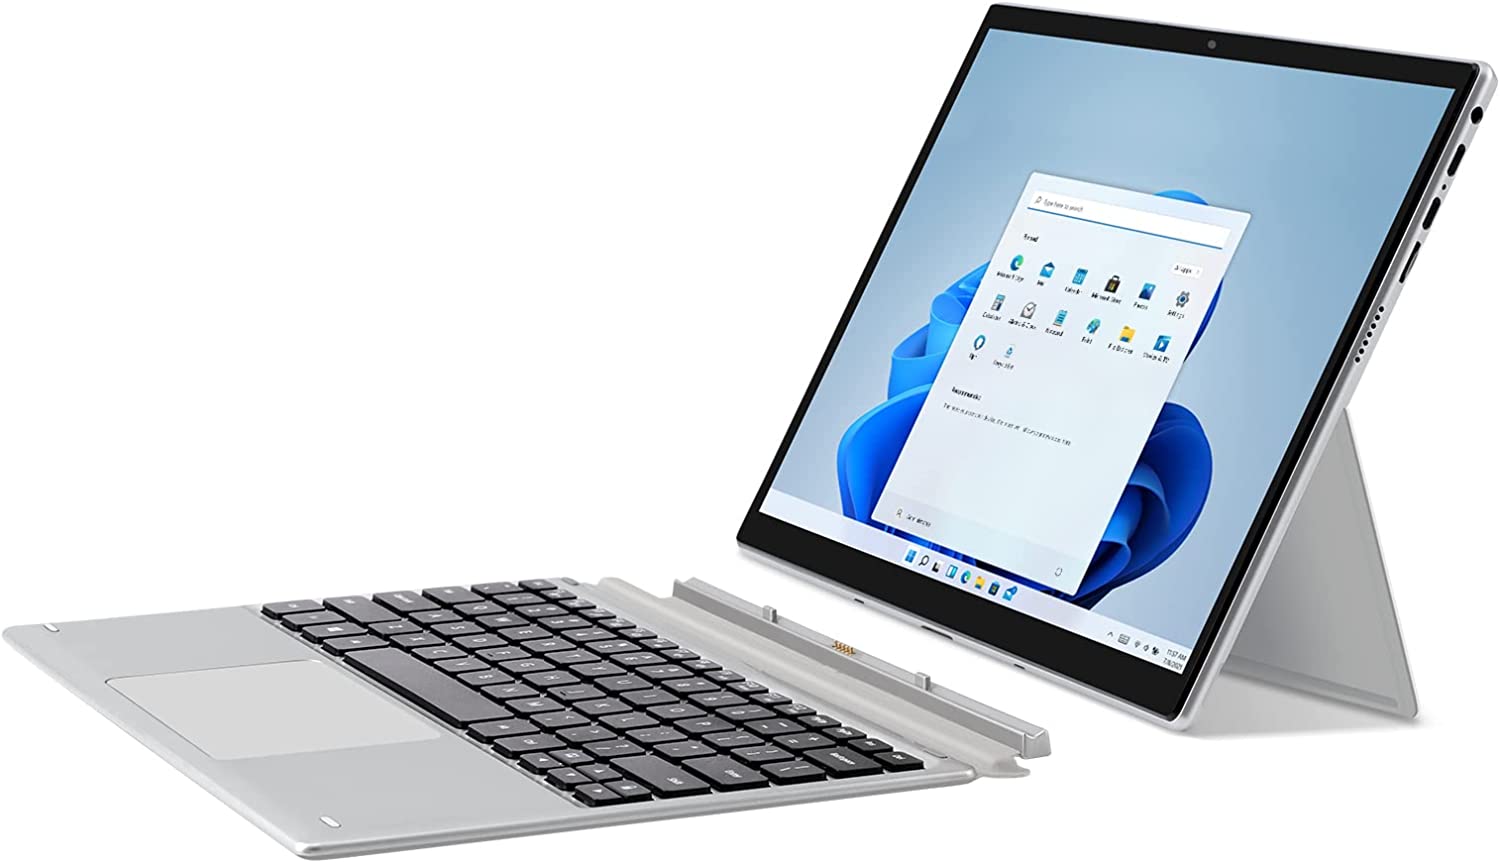 VGKE B12 Detachable 2-in-1 Laptop Touchscreen Windows [...]